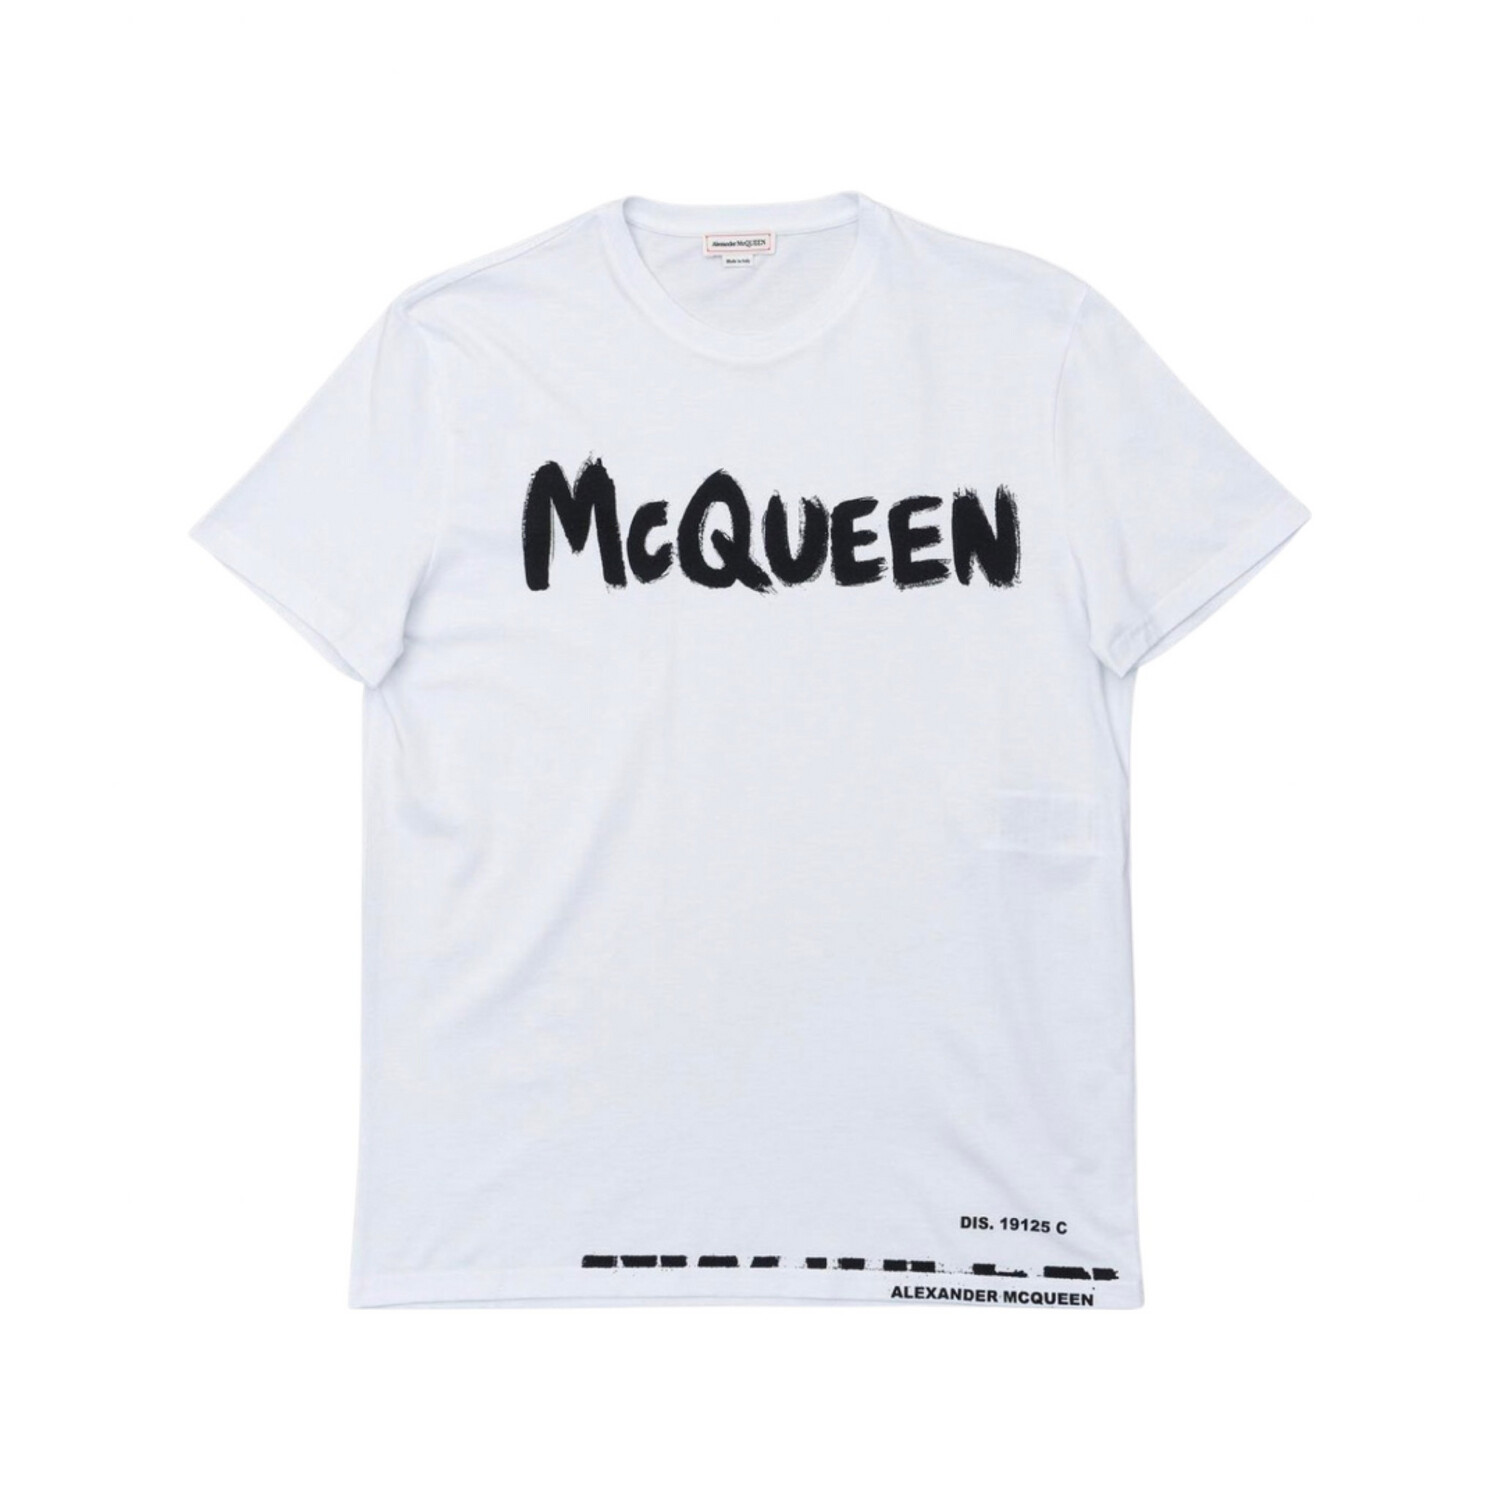 ALEXANDER MCQUEEN - Black Grey Graffiti T-shirt White